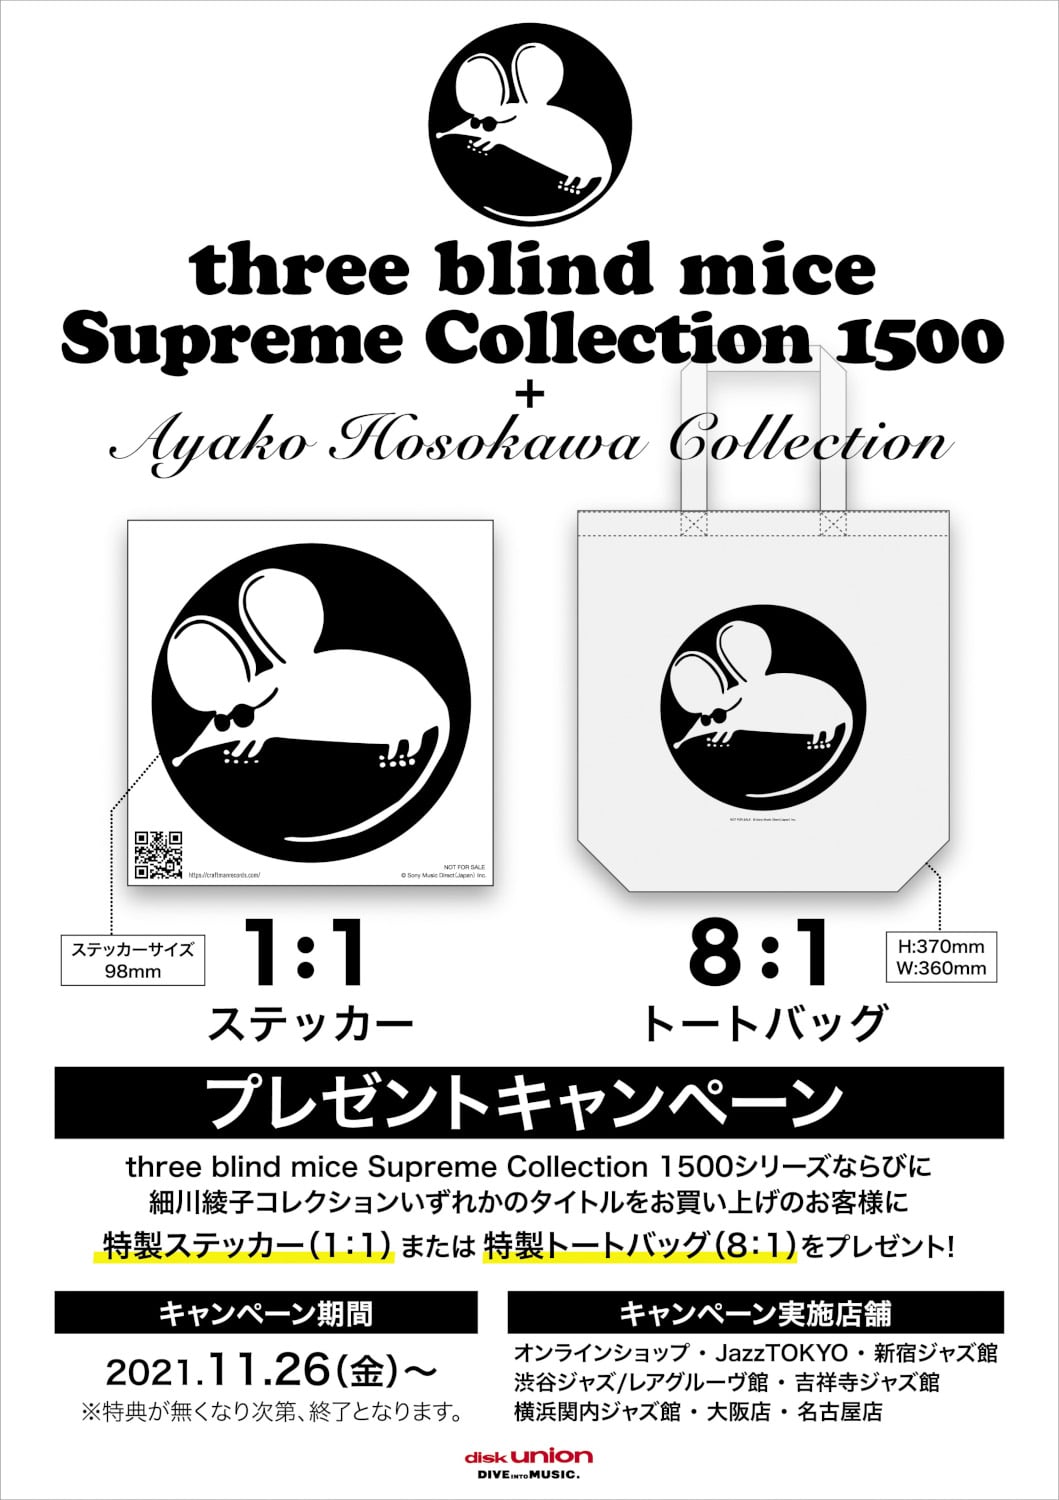 three blind mice Supreme Collection 1500 特製ステッカー&トート